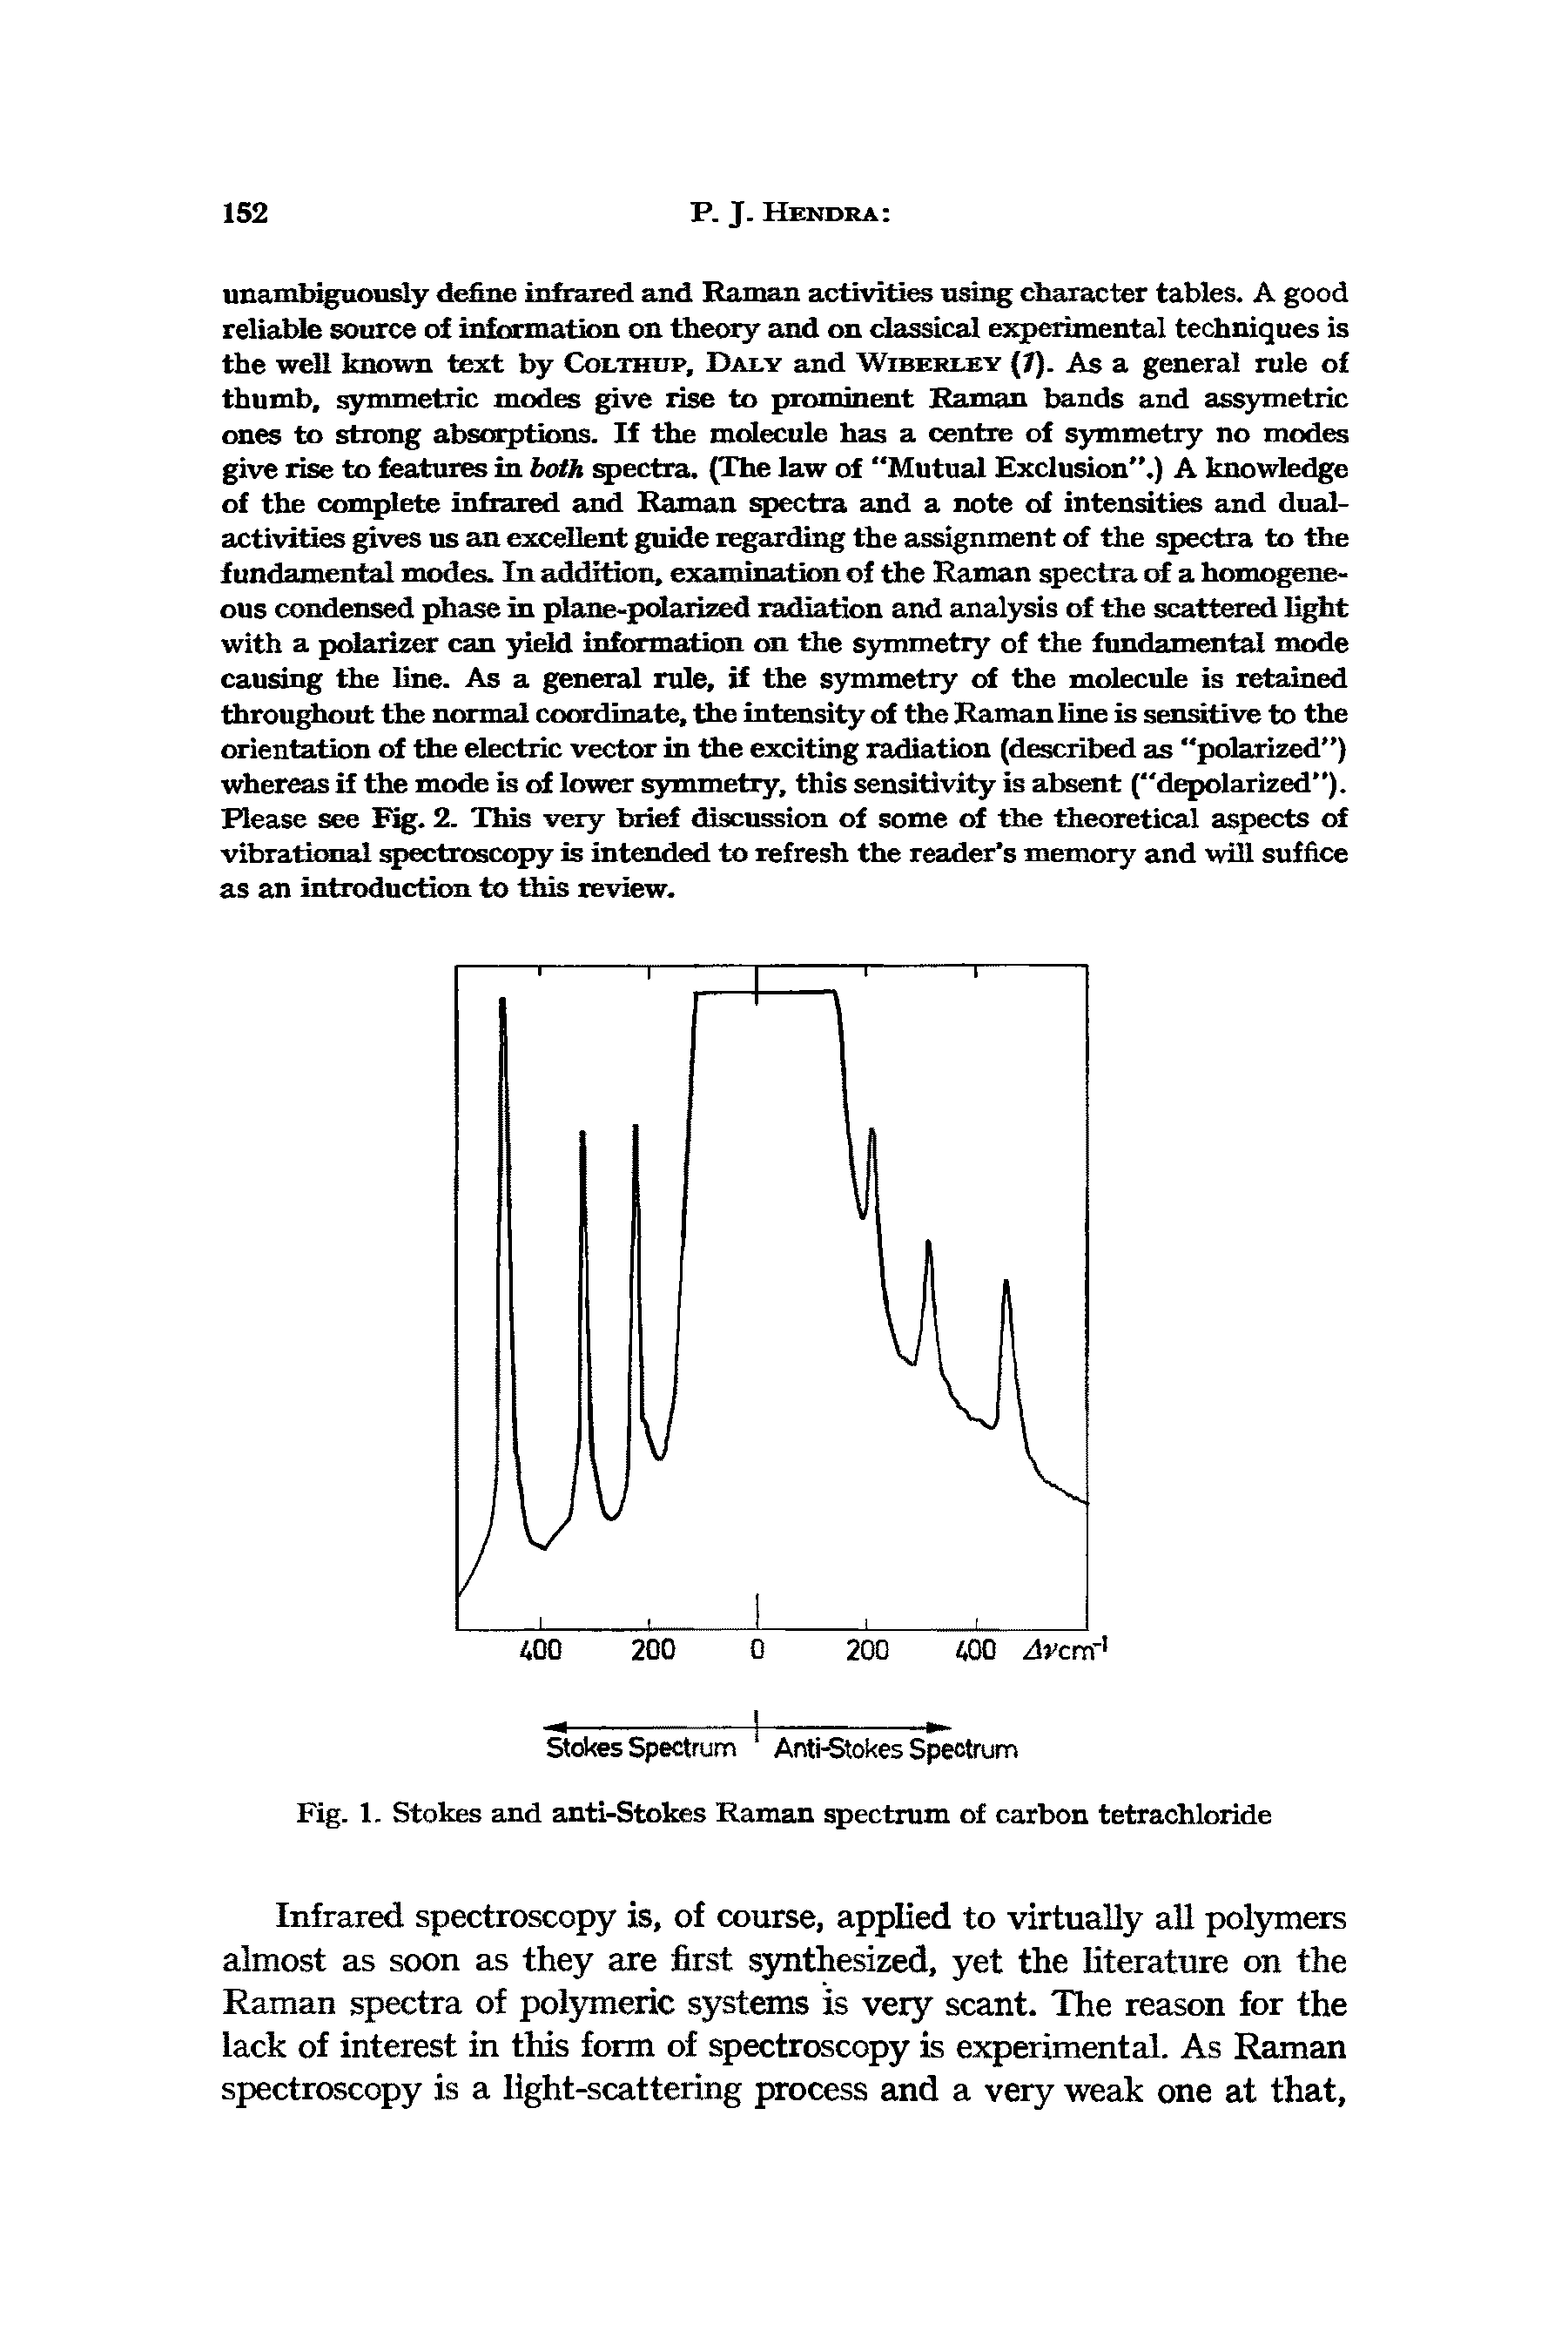 Fig. 1. Stokes and anti-Stokes Raman spectrum of carbon tetrachloride...